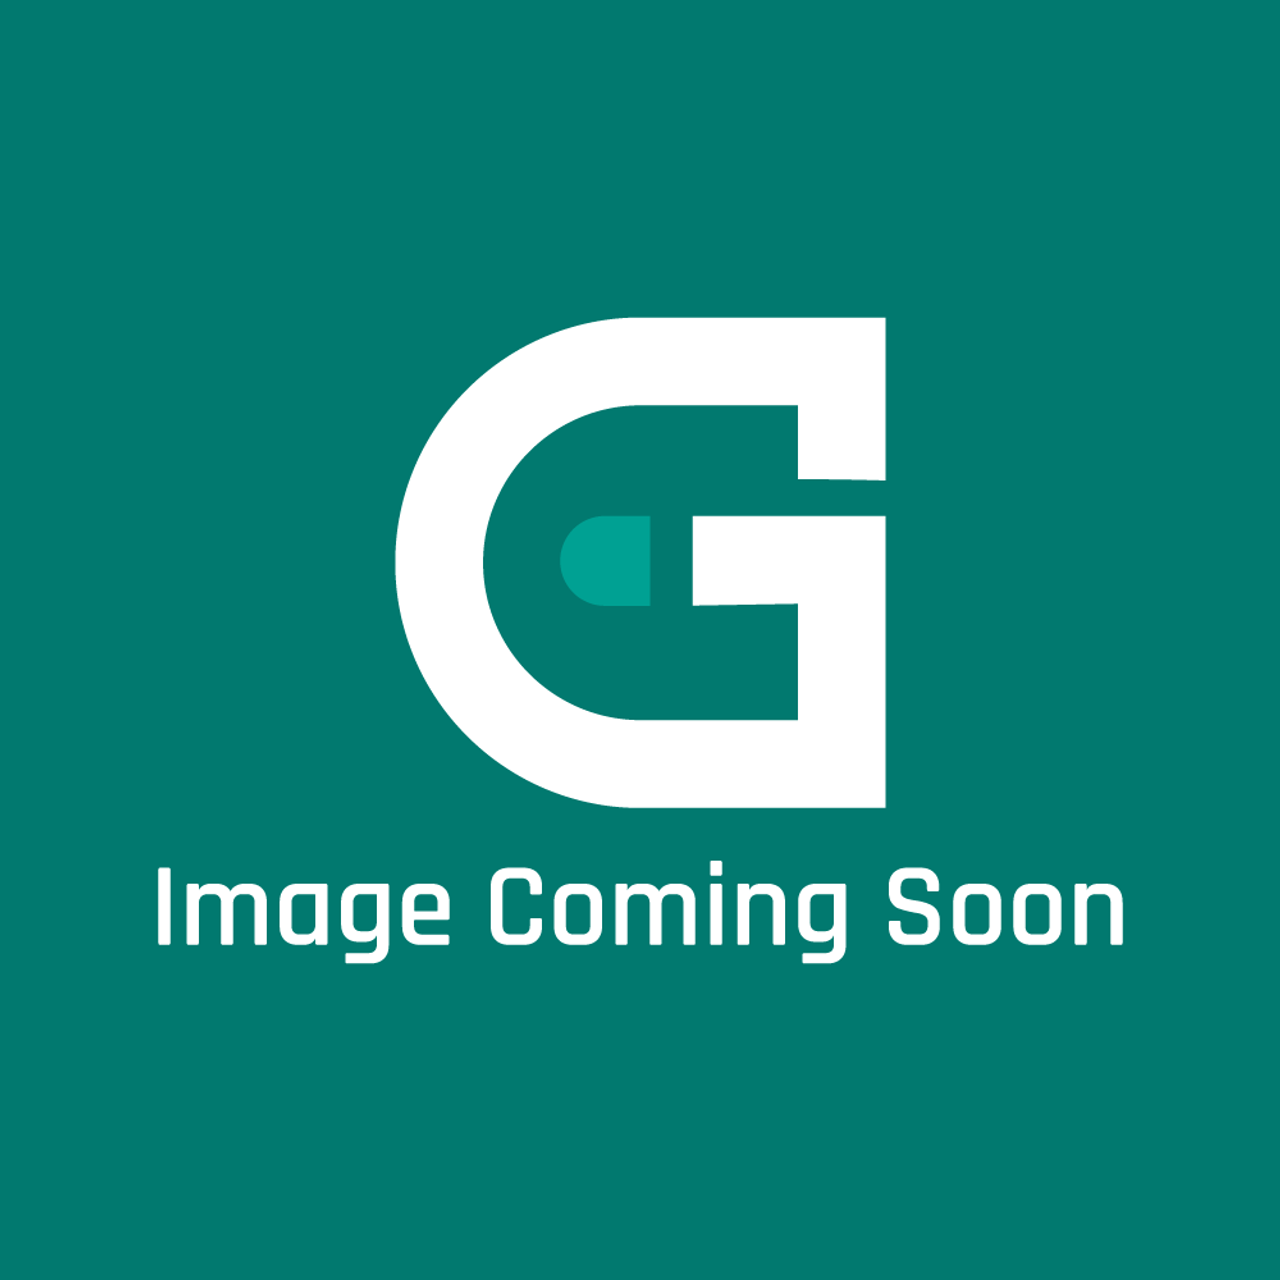 Garland 4512109 - Knob Kit, 2138700, 26859 0 - Image Coming Soon!